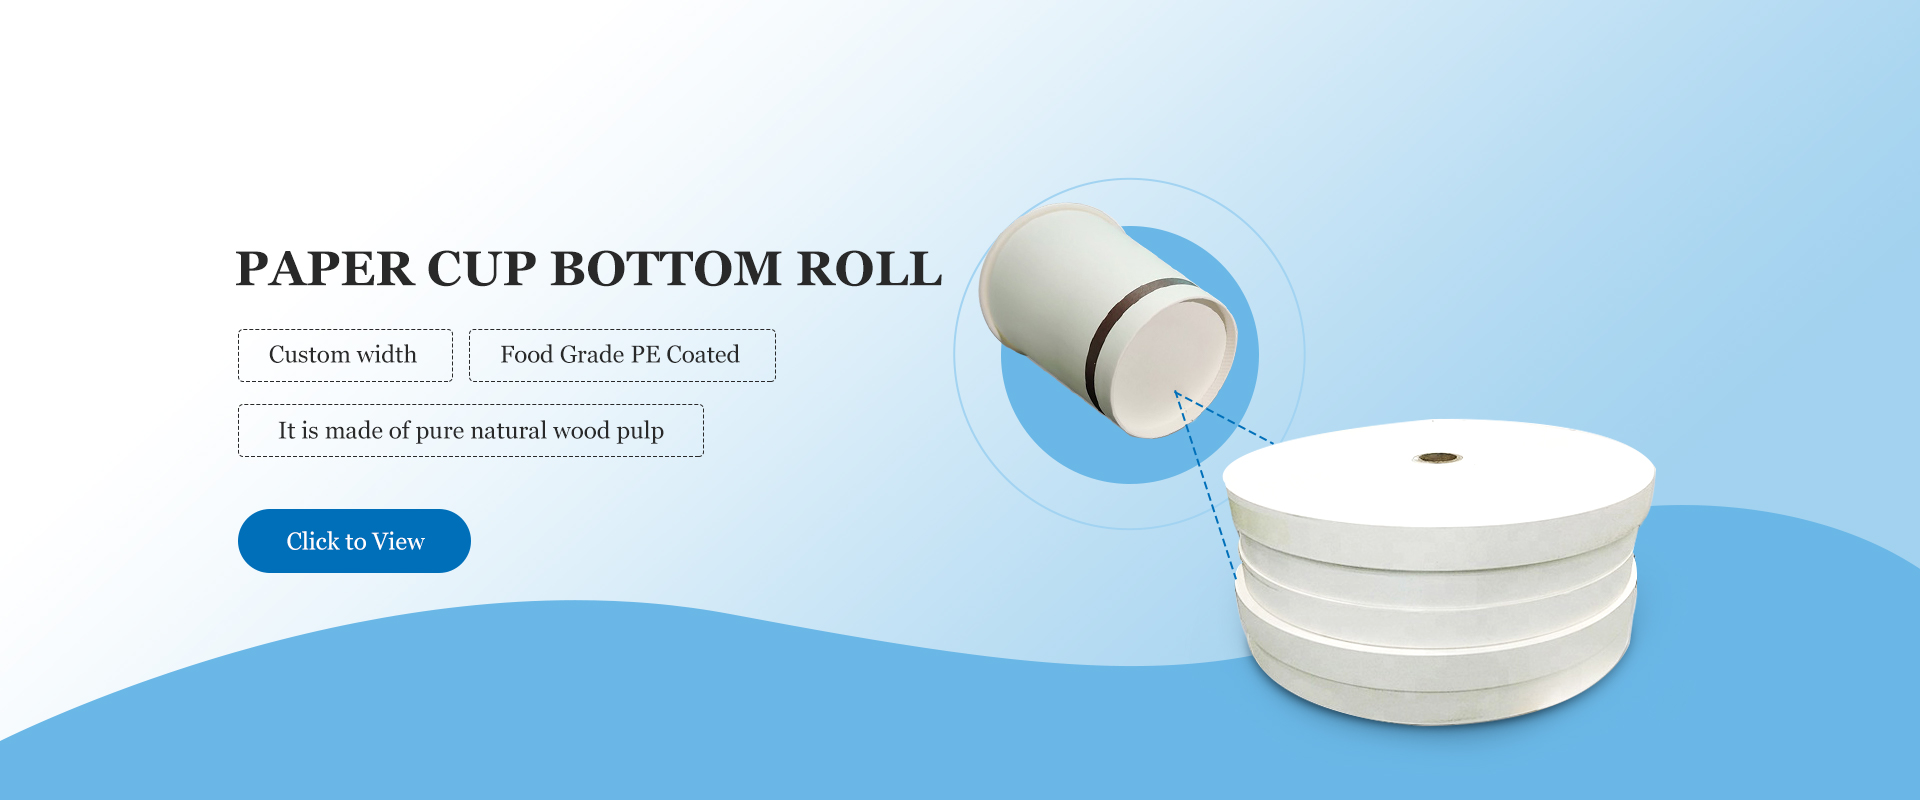 Pampiri Cup Bottom Roll